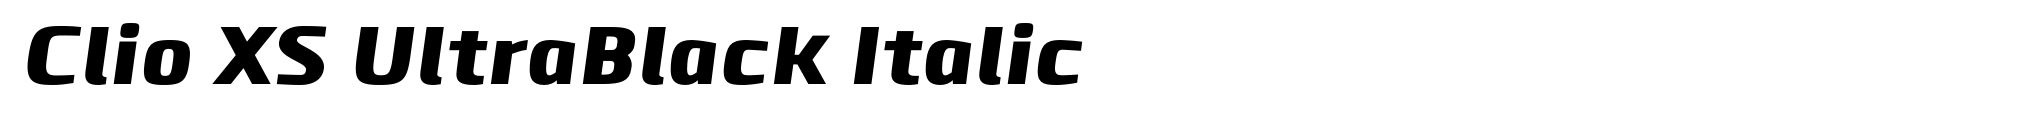 Clio XS UltraBlack Italic image